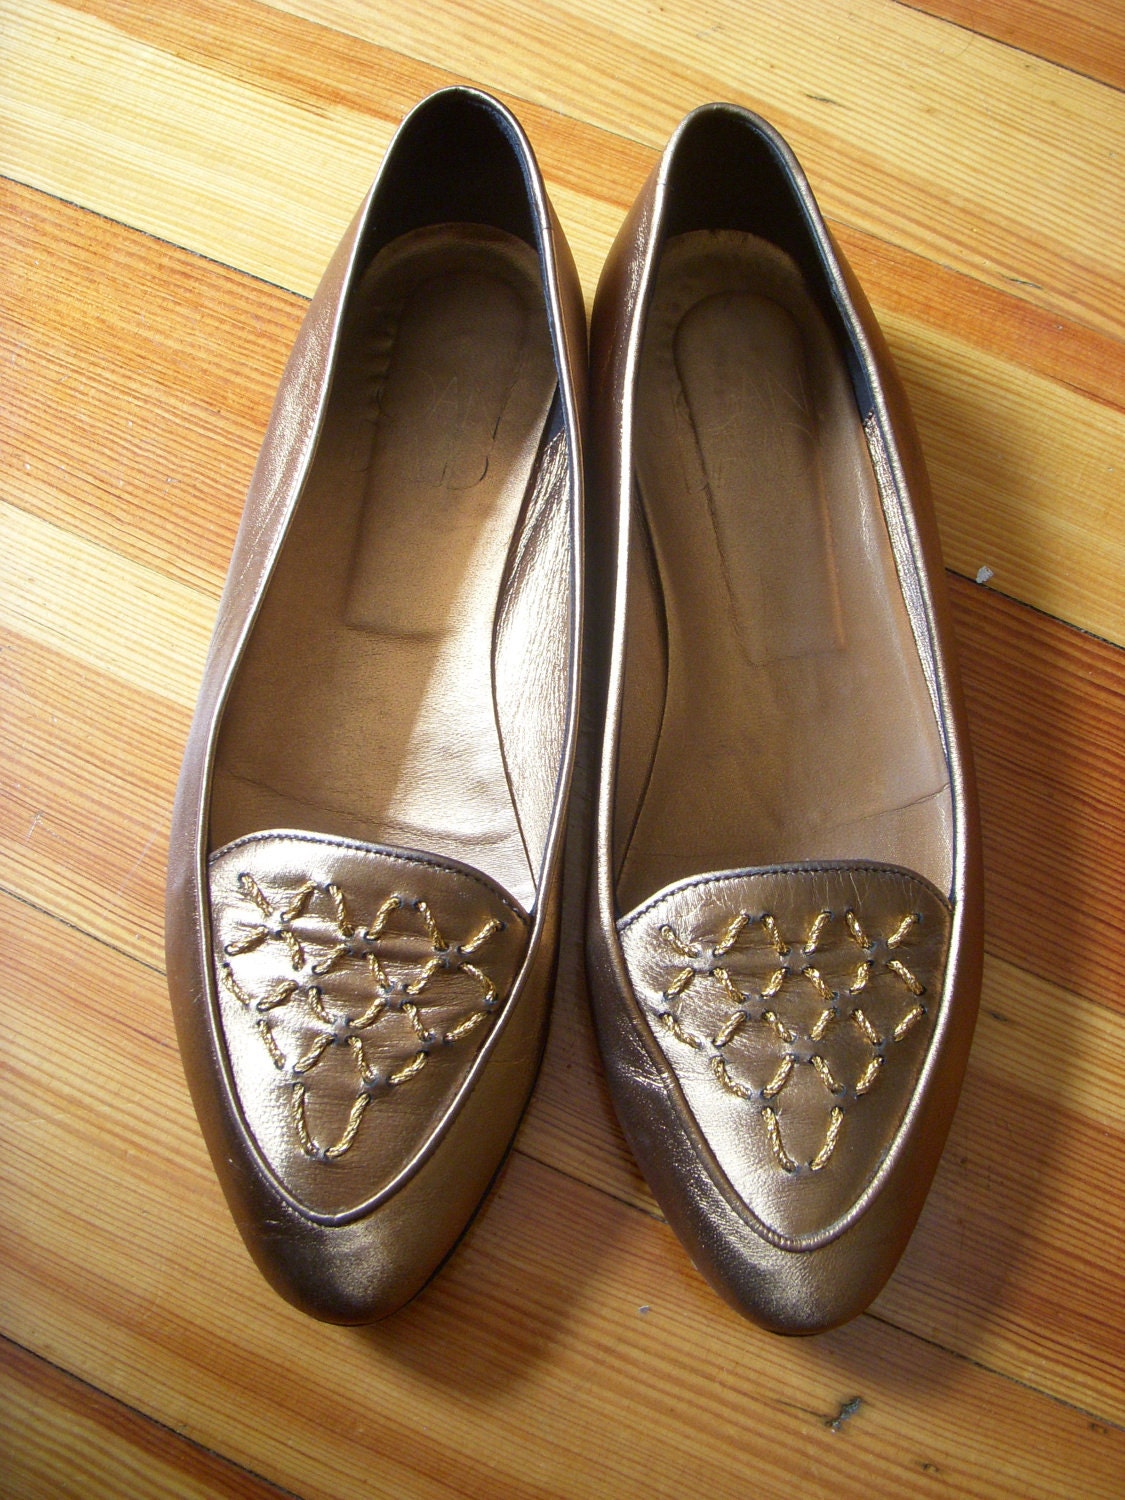 SALE Vintage Joan and David Bronze Leather Flats Ladies Shoes